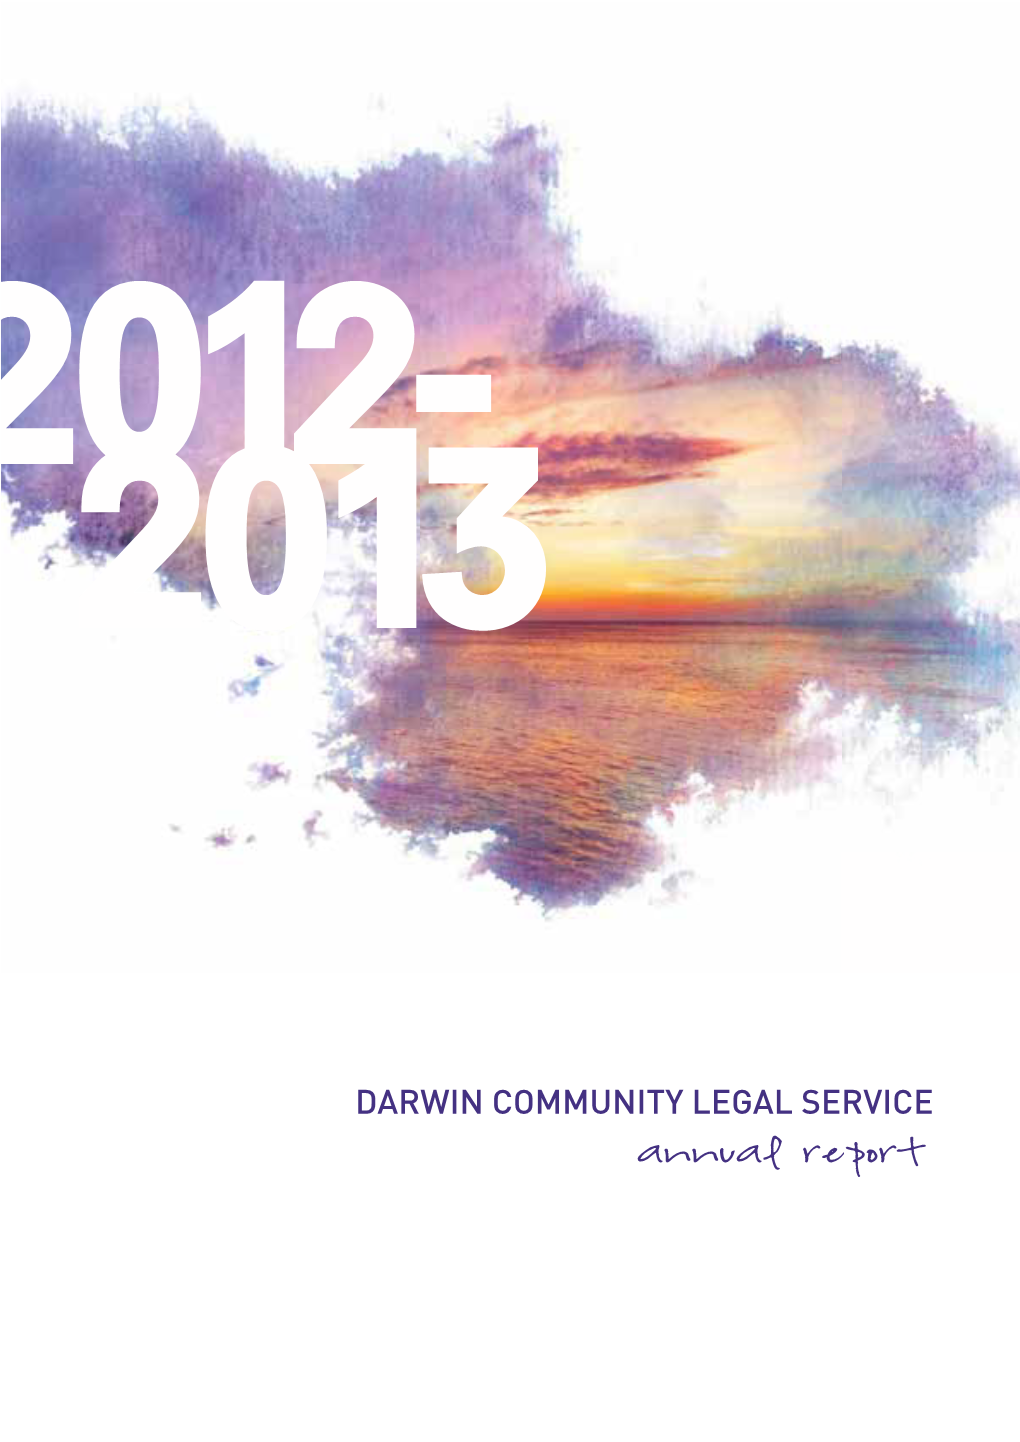 Annual Report Annual Report Contents